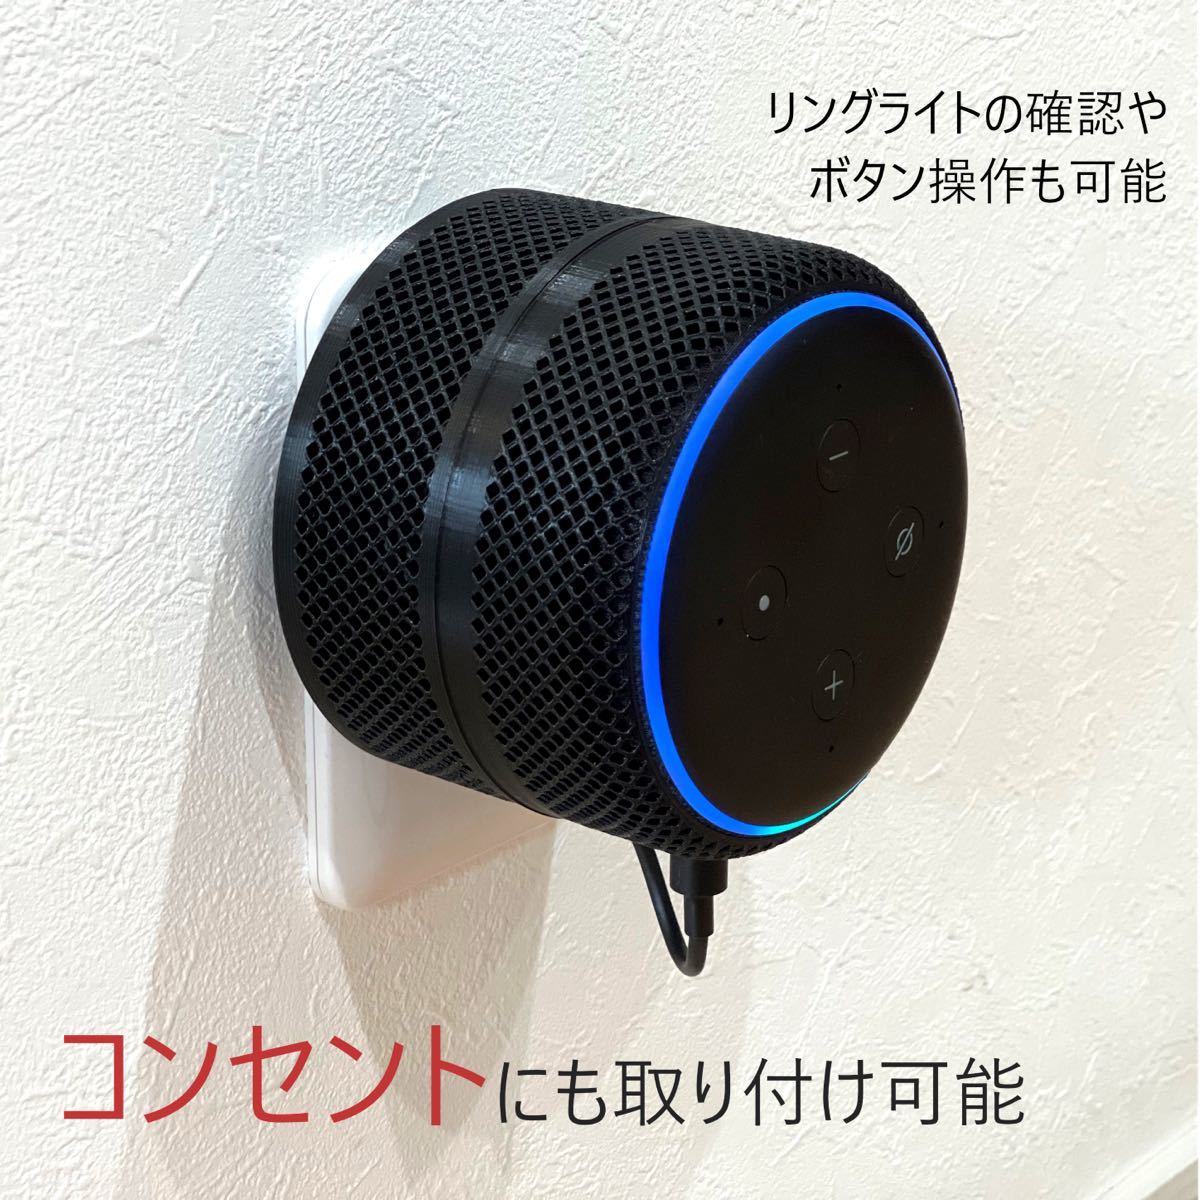 Amazon Echo Dot 第3世代 ライティングレール取付ユニット(スピーカー 